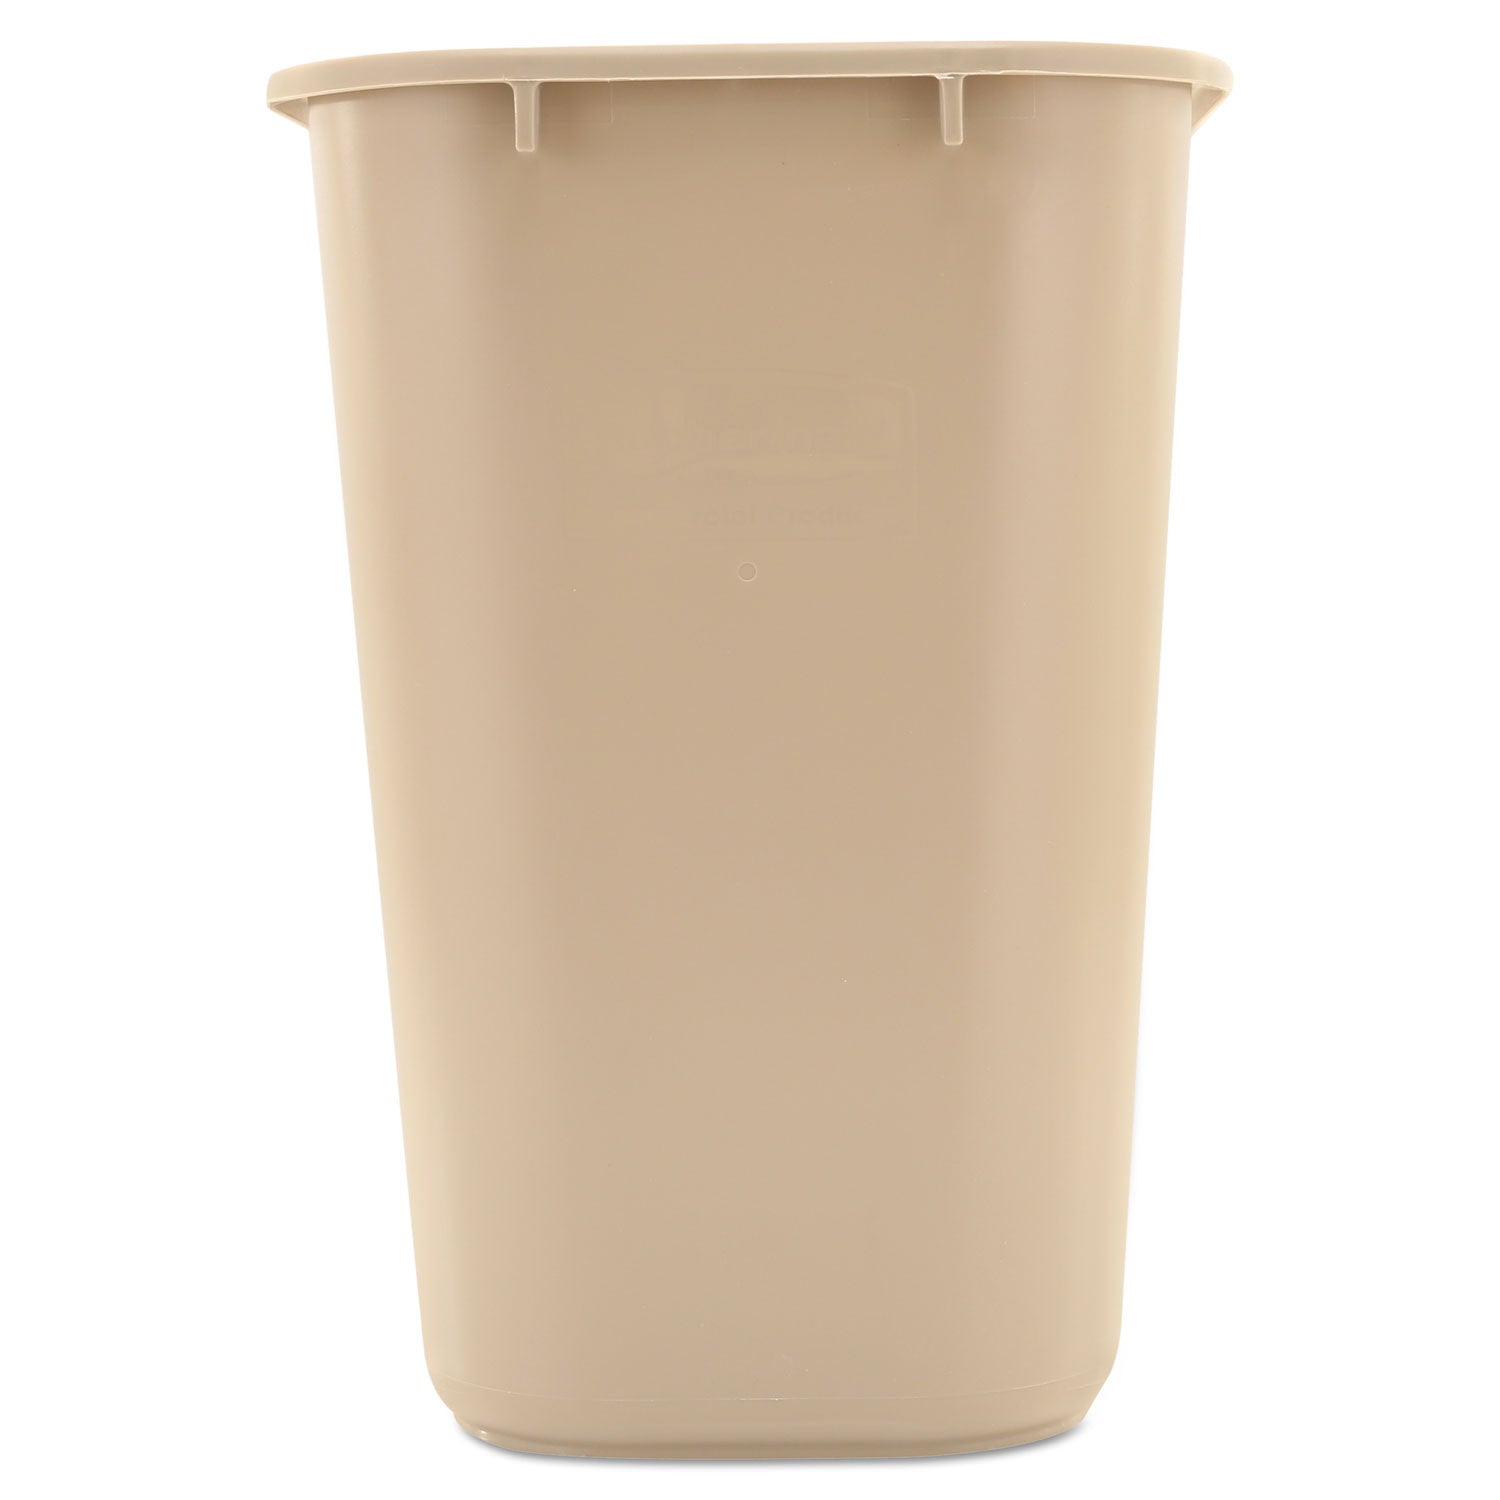 Deskside Plastic Wastebasket, 7 gal, Plastic, Beige - 